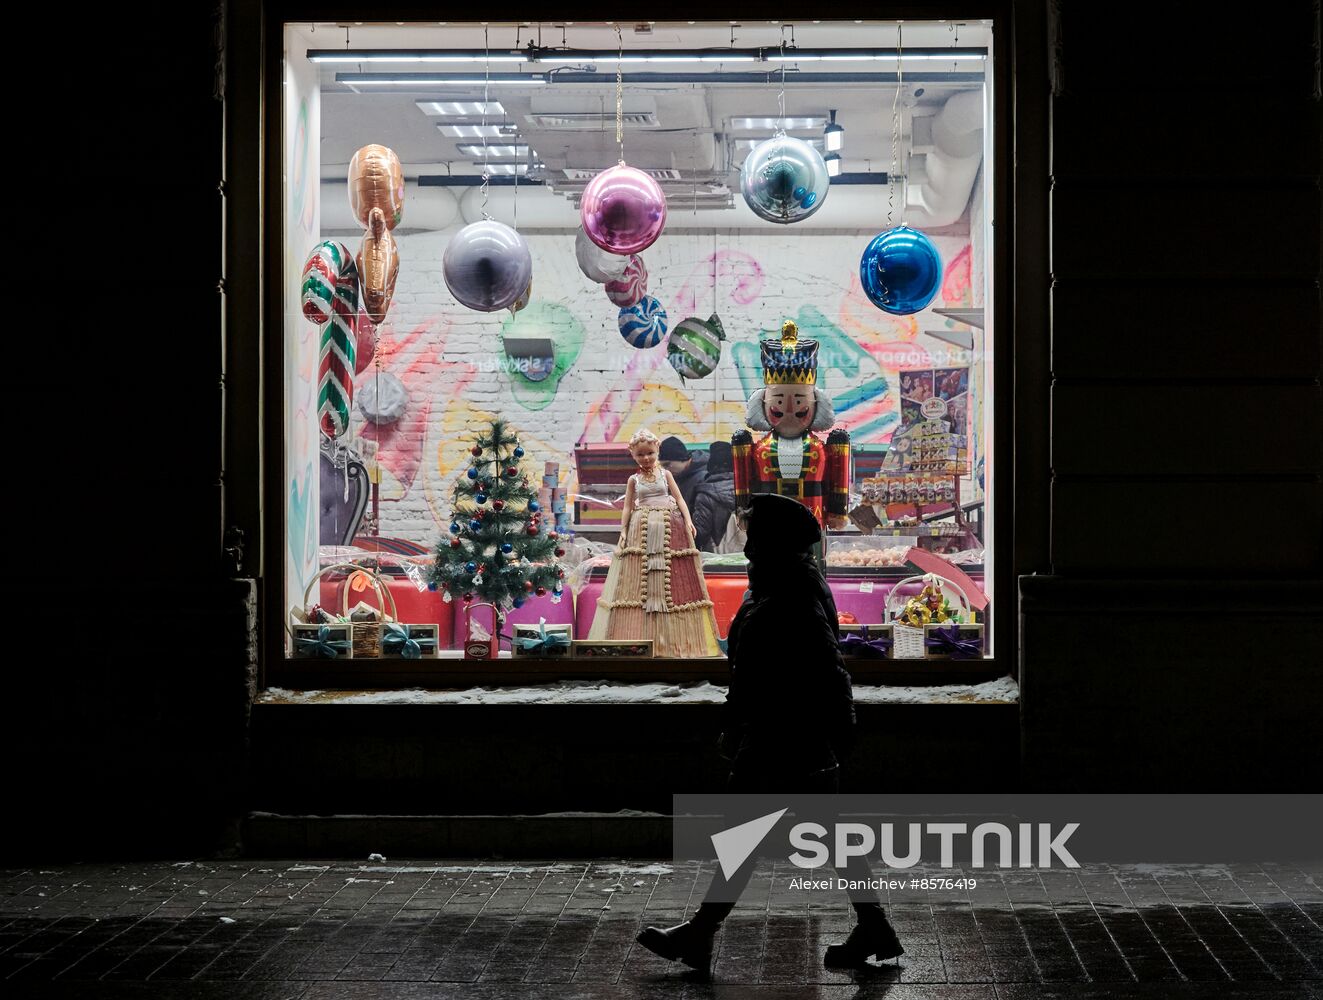 Russia New Year Season Decorations